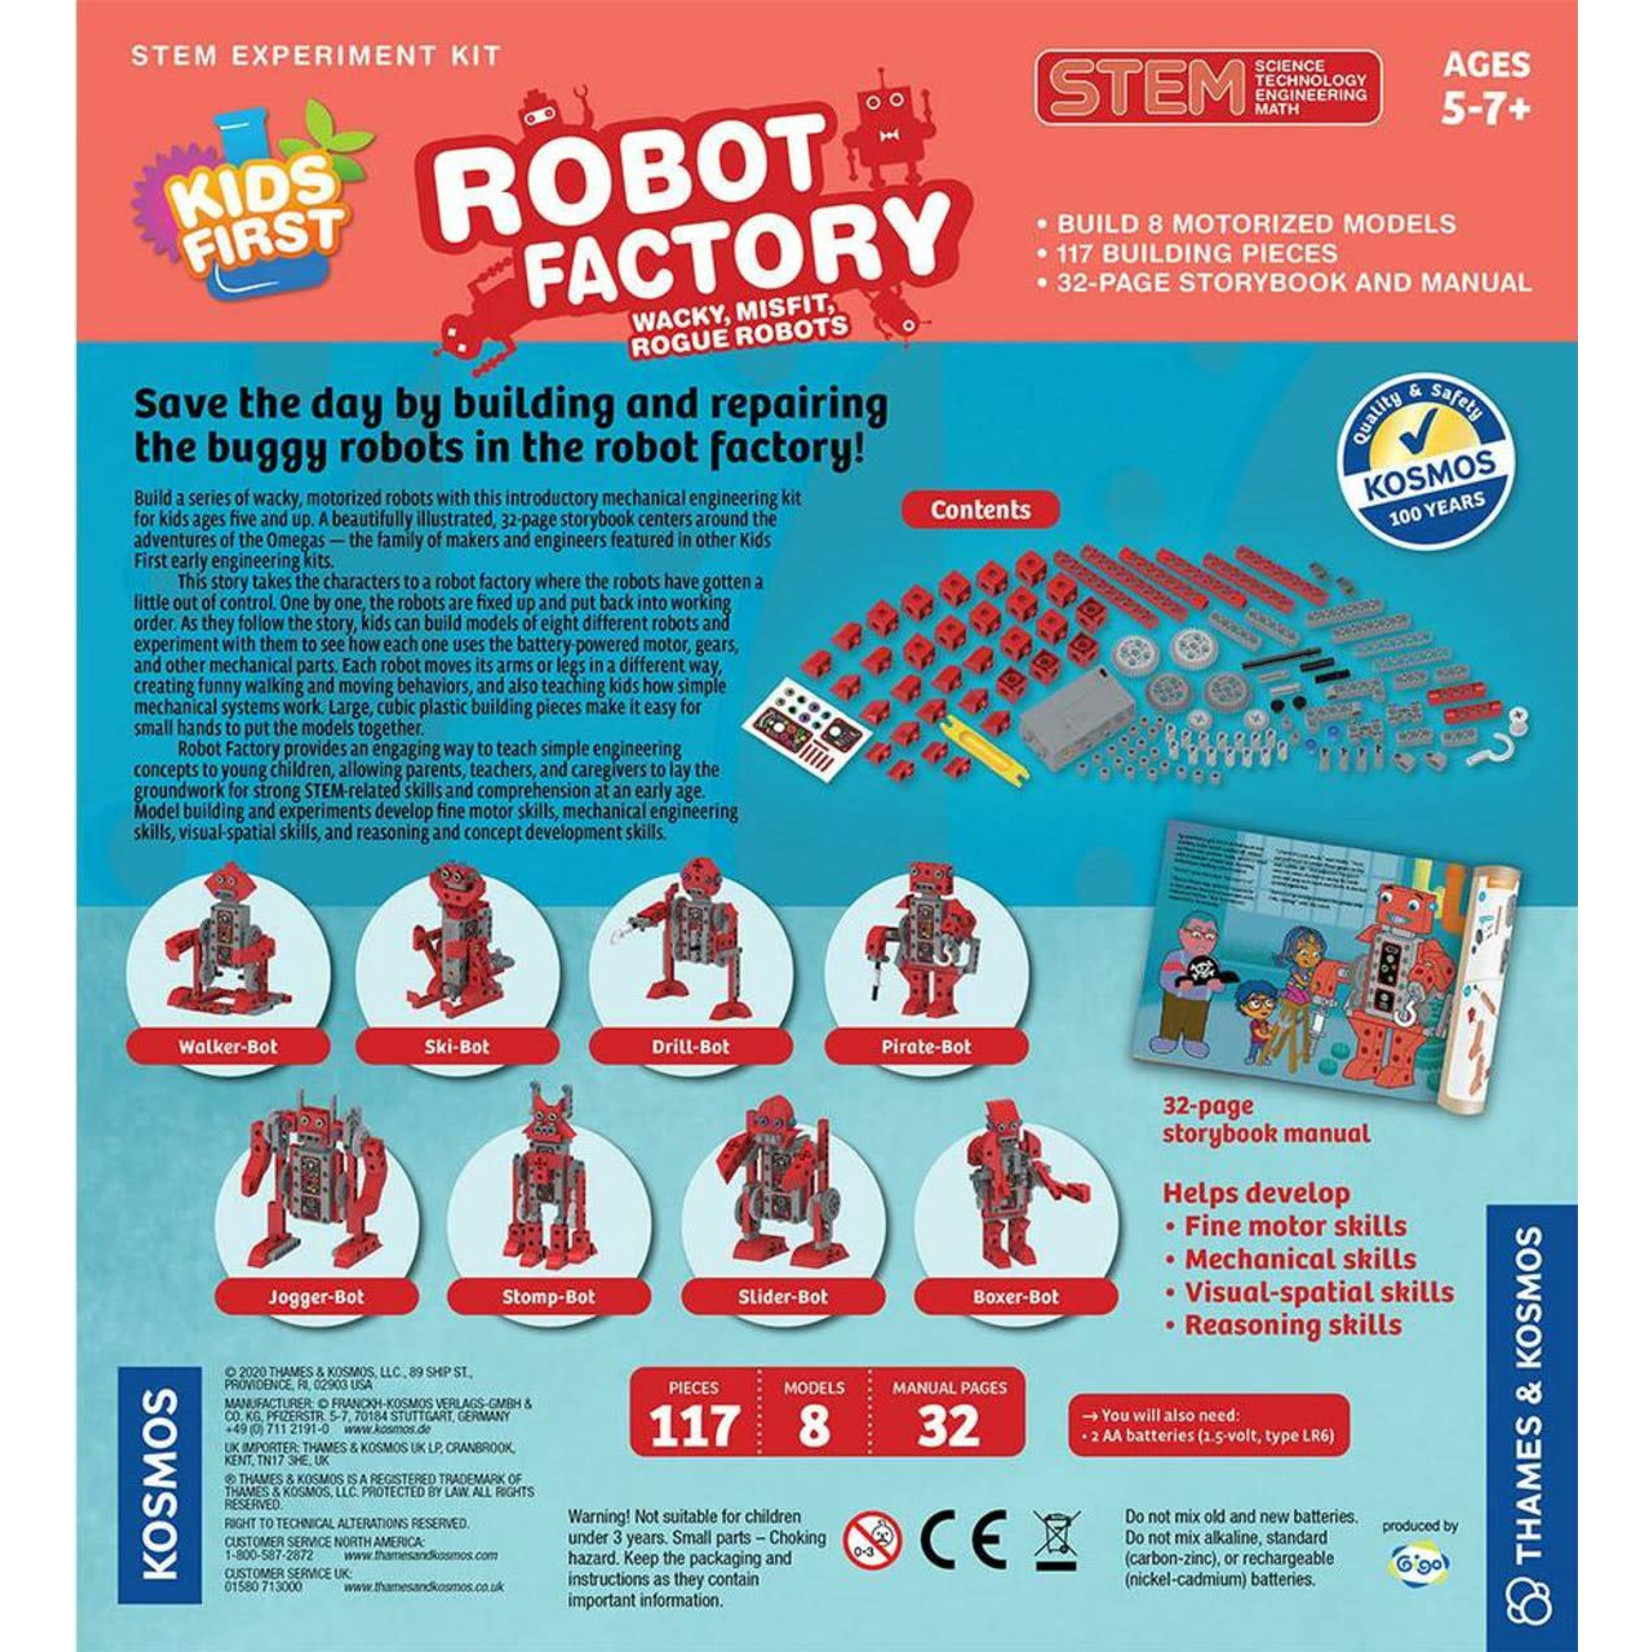 Thames & Kosmos Kids First: Robot Factory